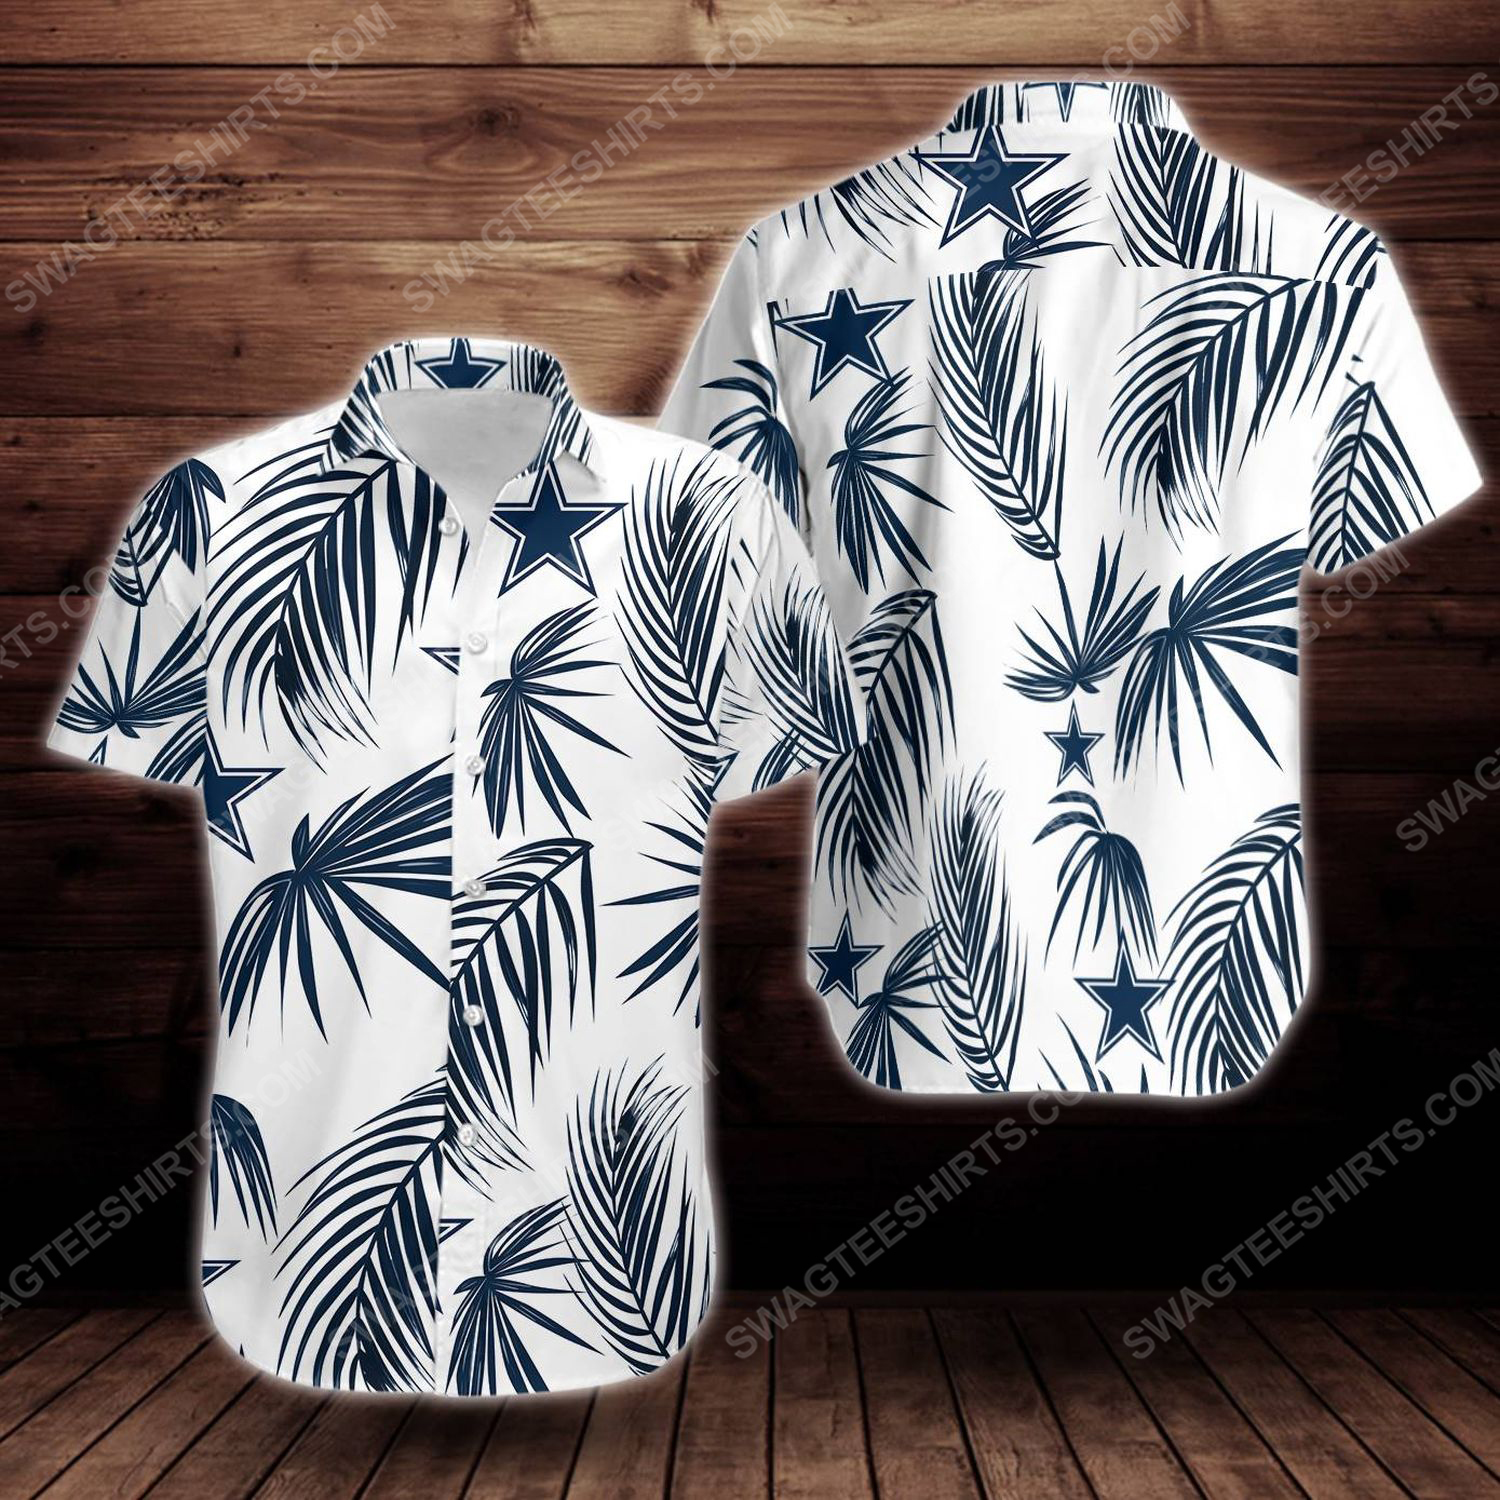 Tropical summer dallas cowboys short sleeve hawaiian shirt 1